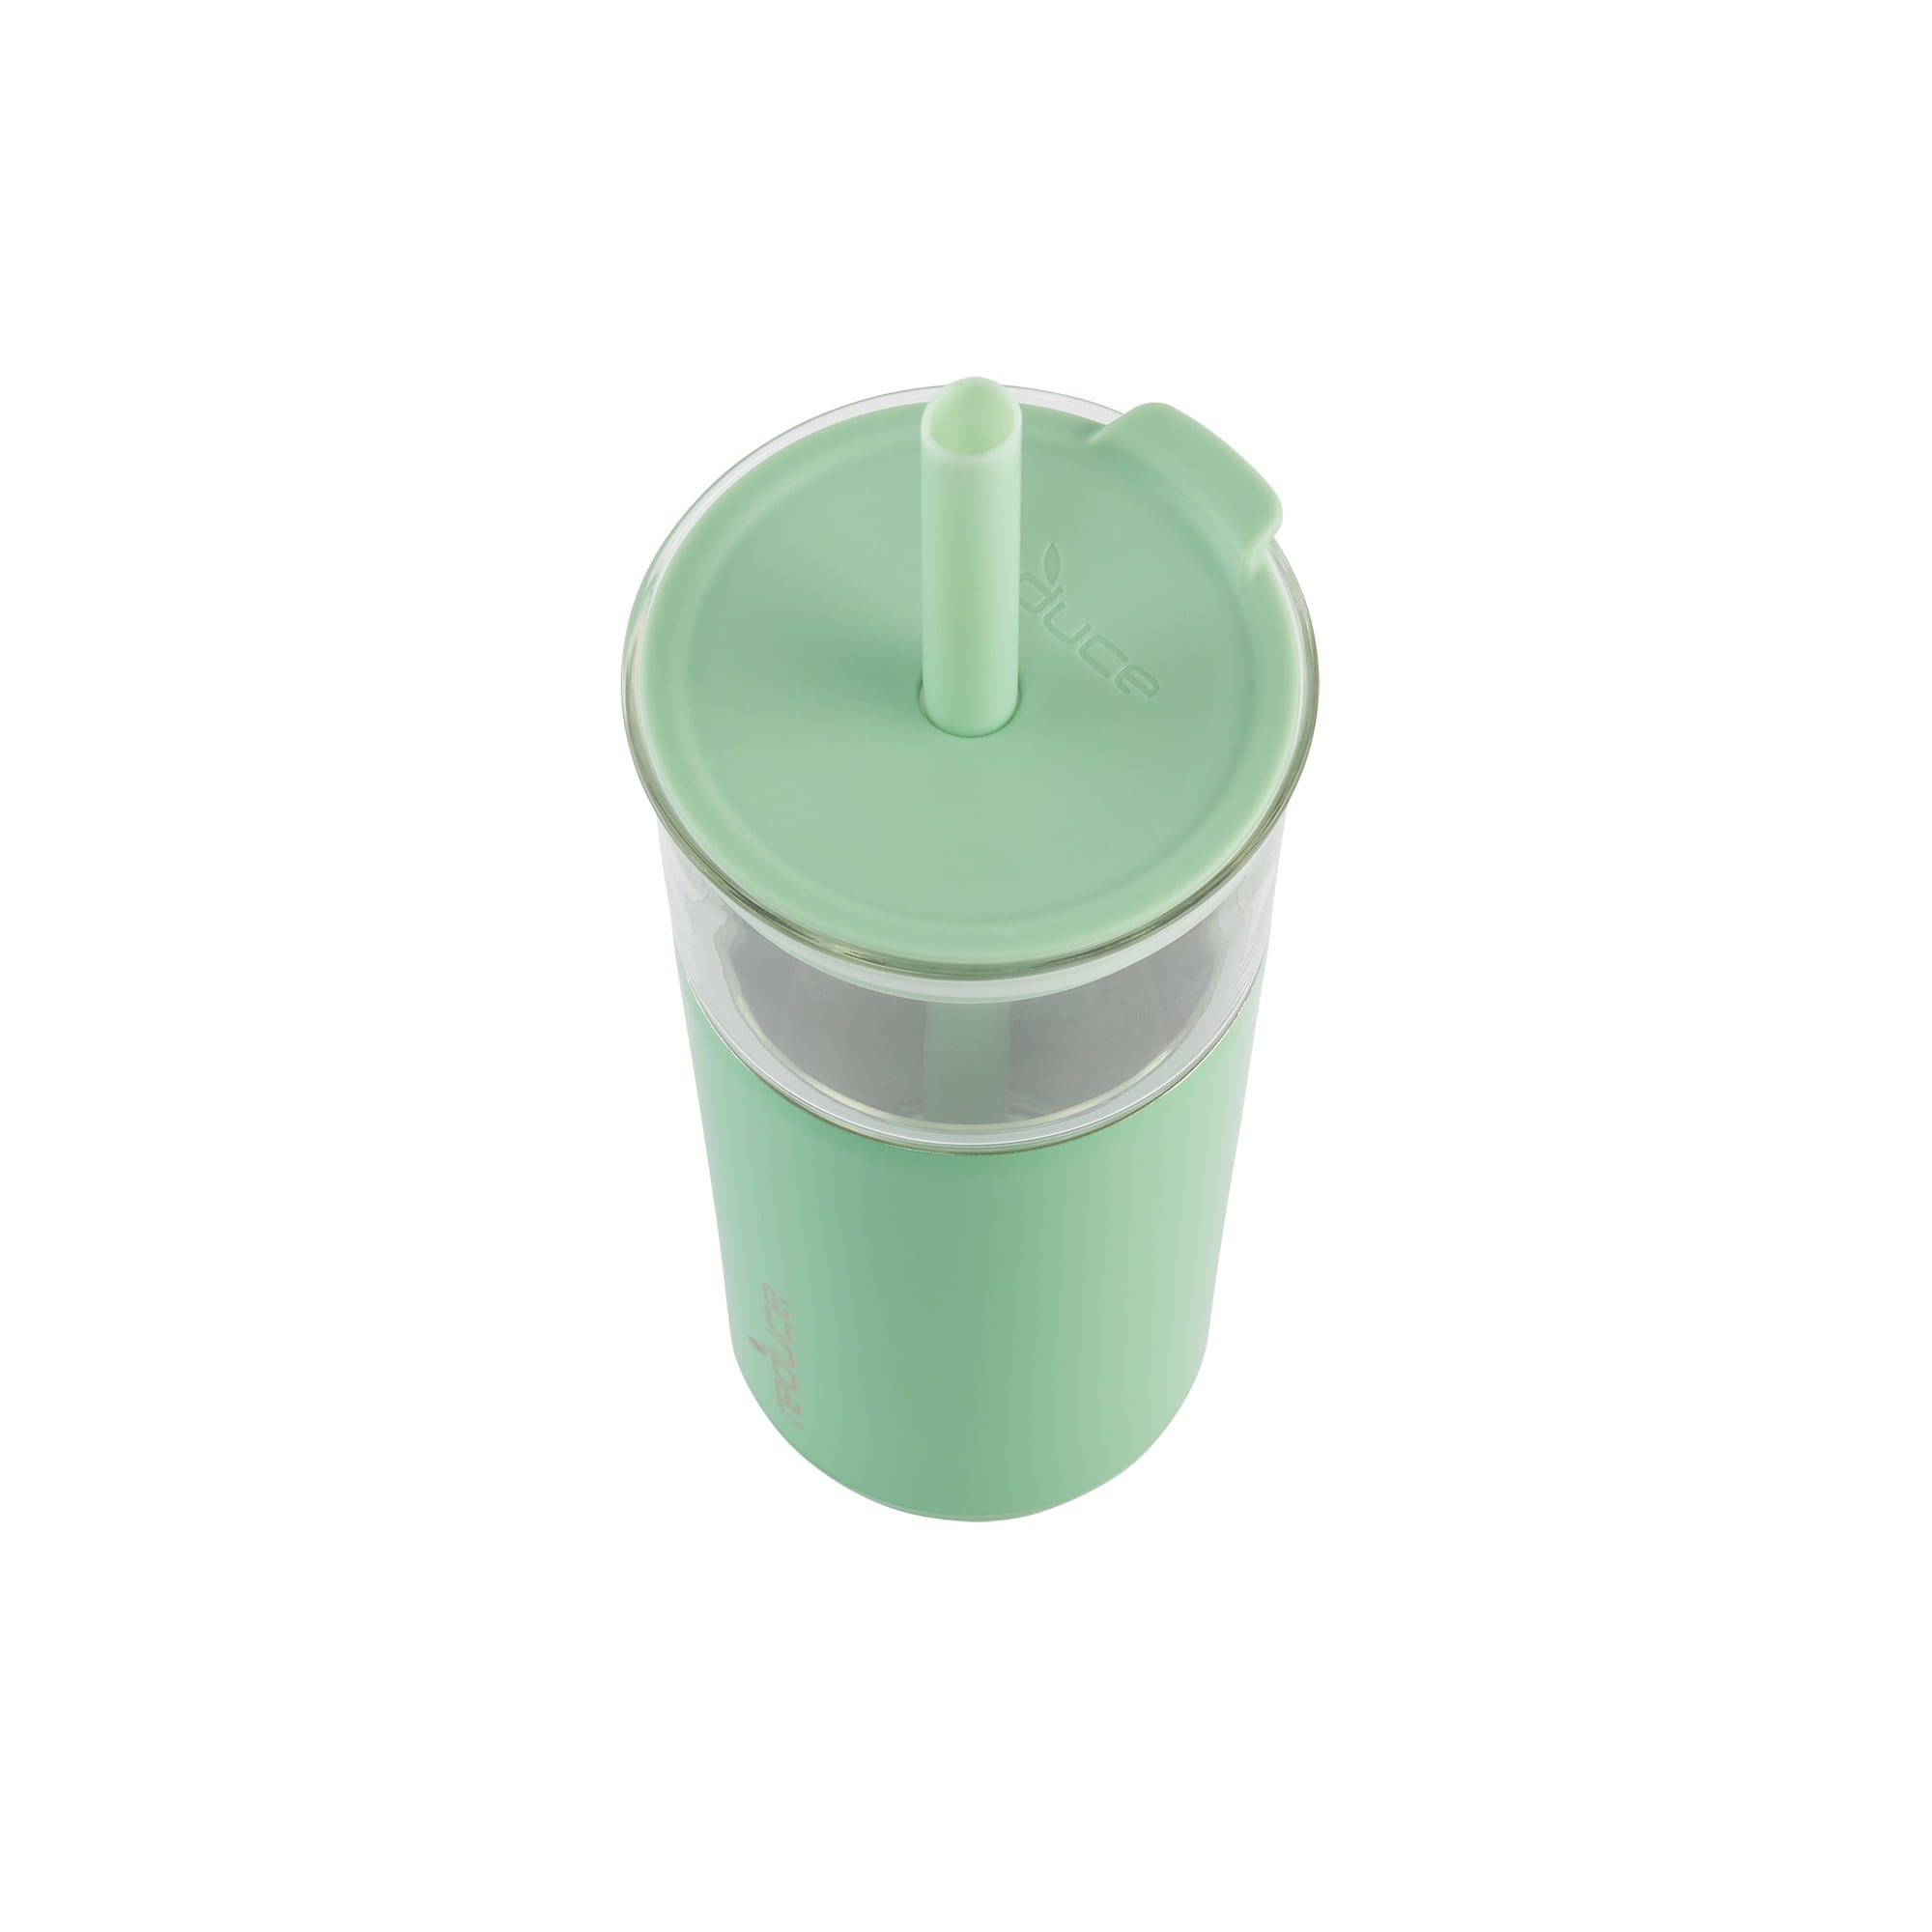 Better Dweller Vacuum-Sealed Metal Margarita Glass with Lid, Insulated  Tumbler Mug, Steel Cup for Va…See more Better Dweller Vacuum-Sealed Metal